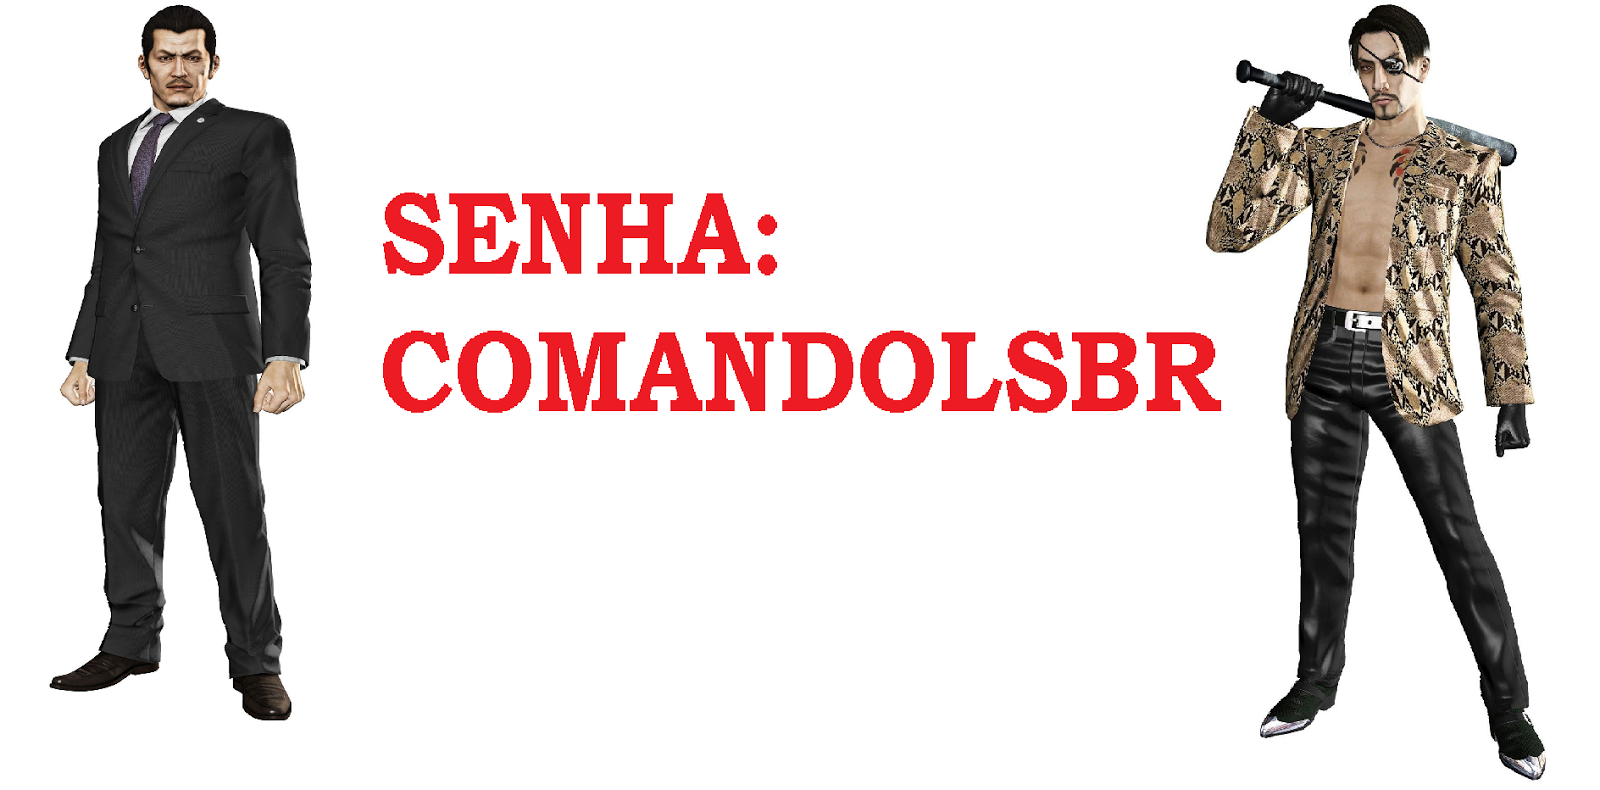 Manual Máfia  Yakuza SENHA(COMANDO+LSBR).